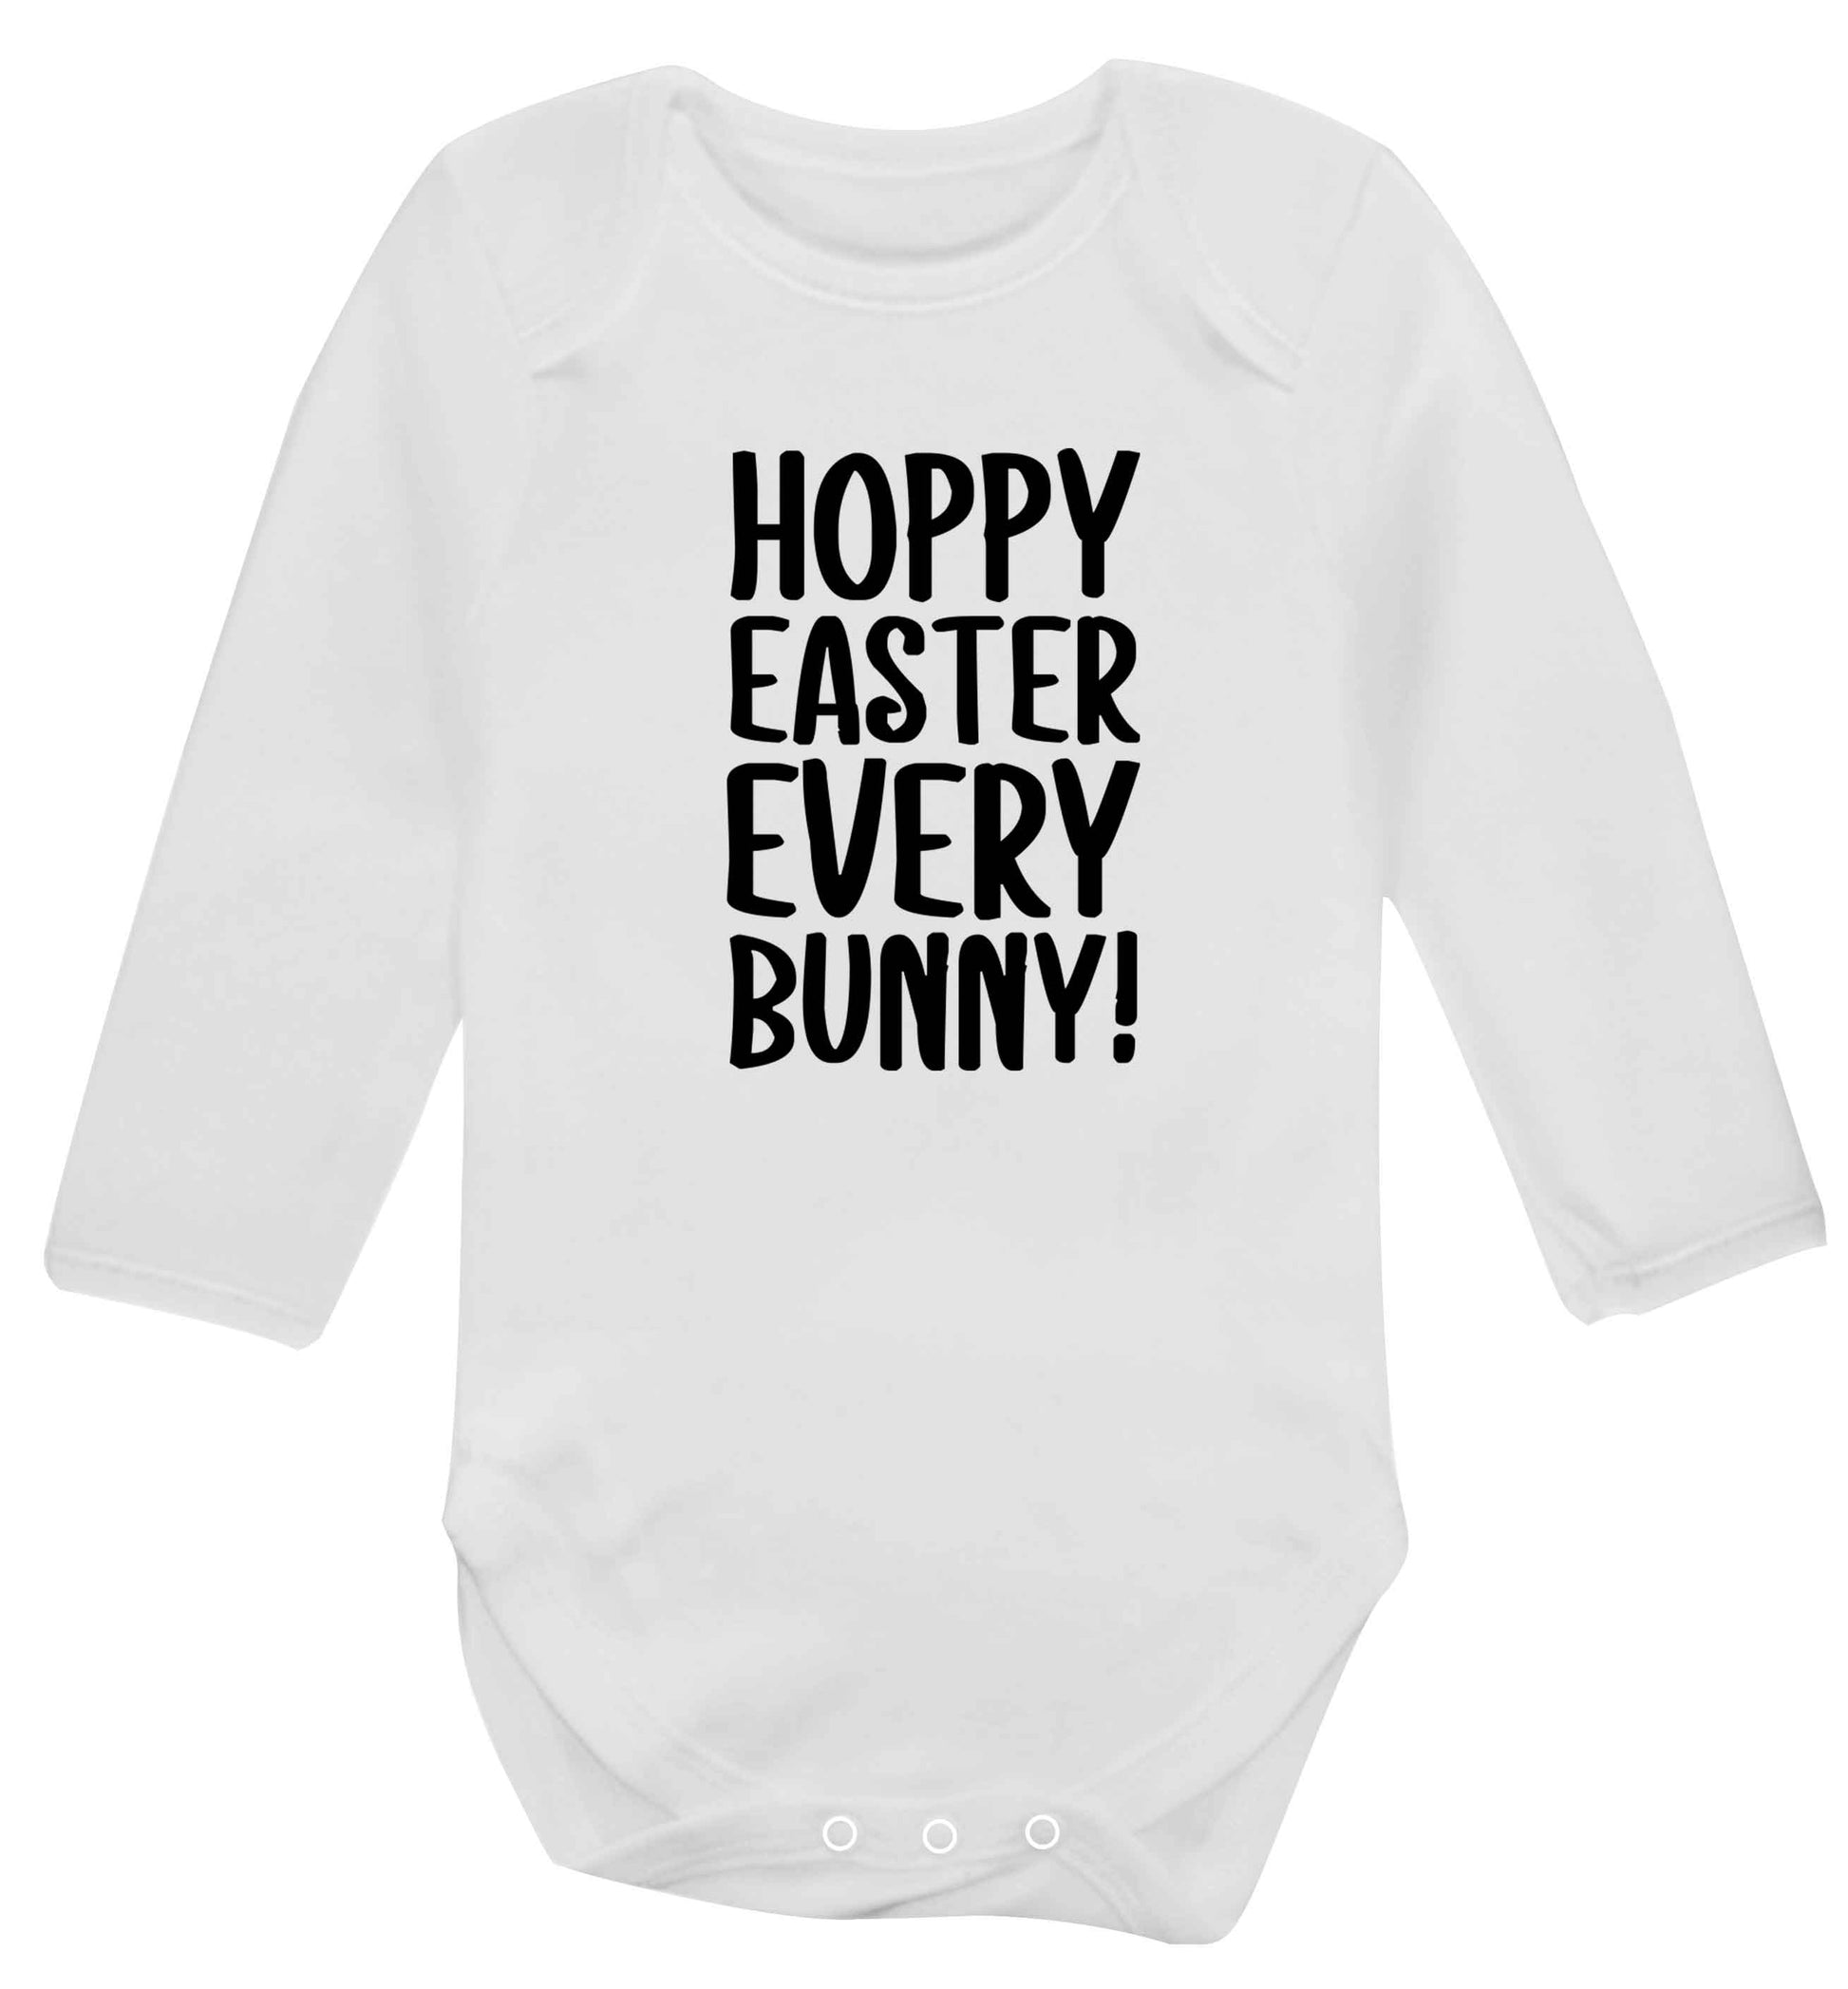 Hoppy Easter every bunny! baby vest long sleeved white 6-12 months